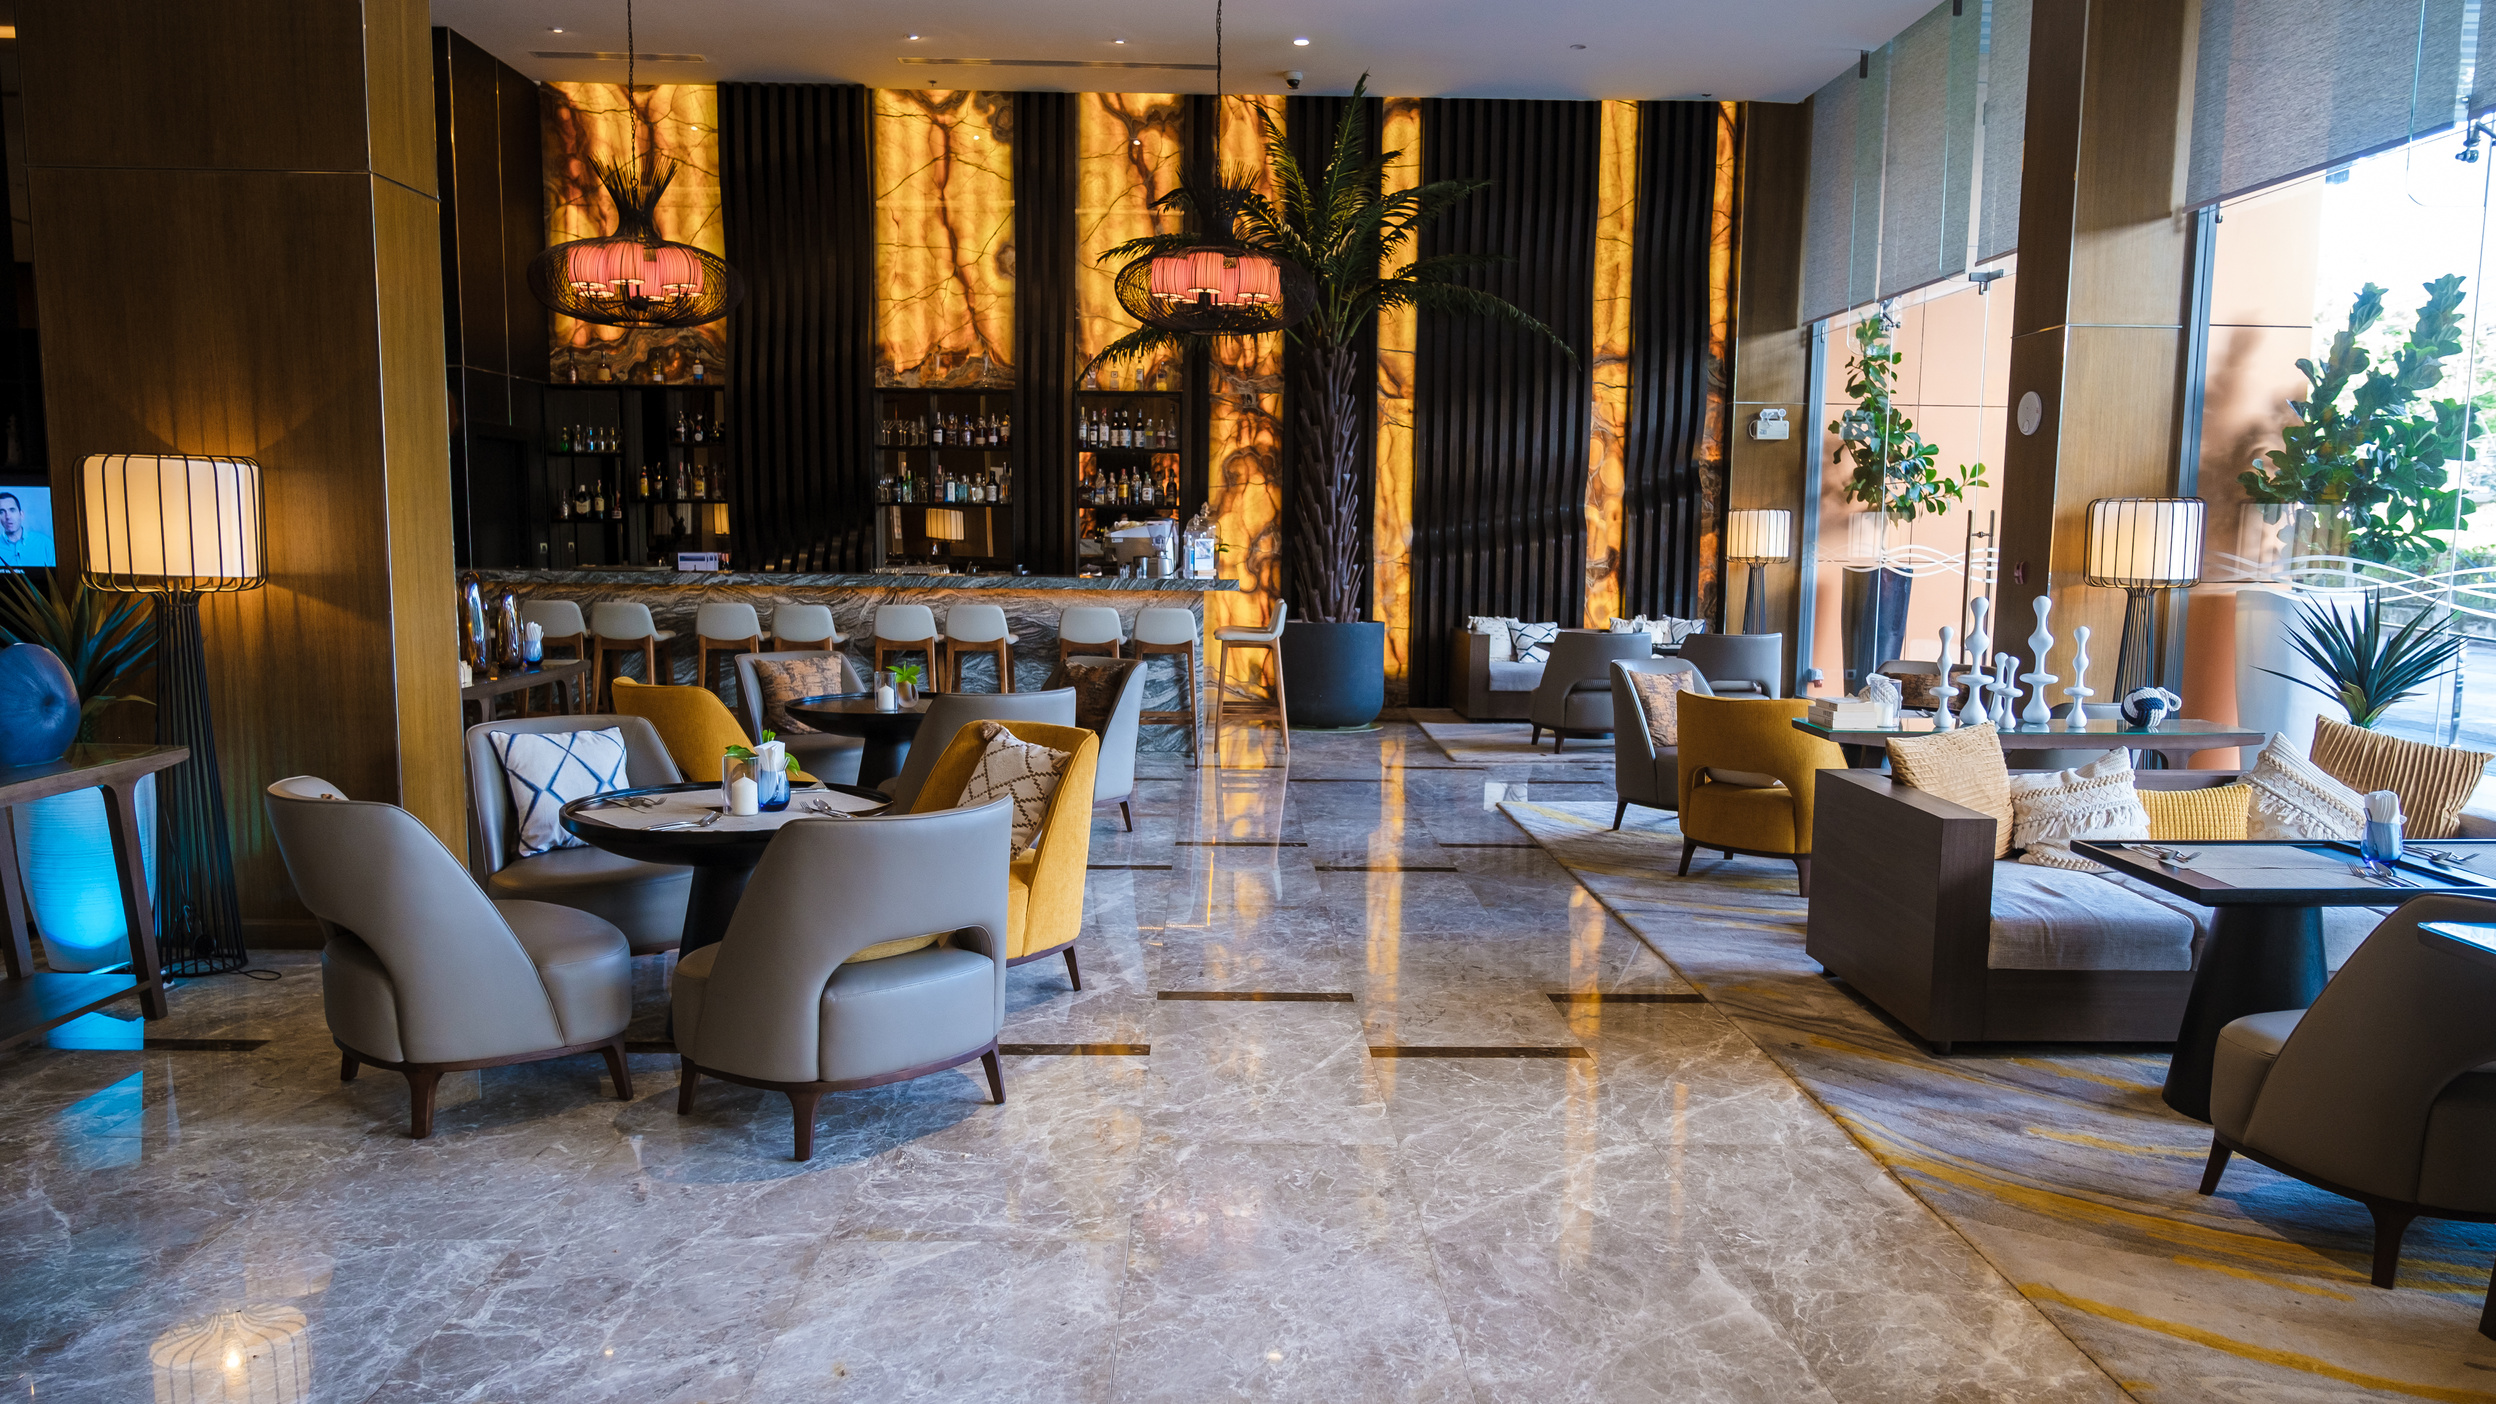 Courtyard Marriott hotel Pattaya Thailand, Classic modern Lobby of hotel